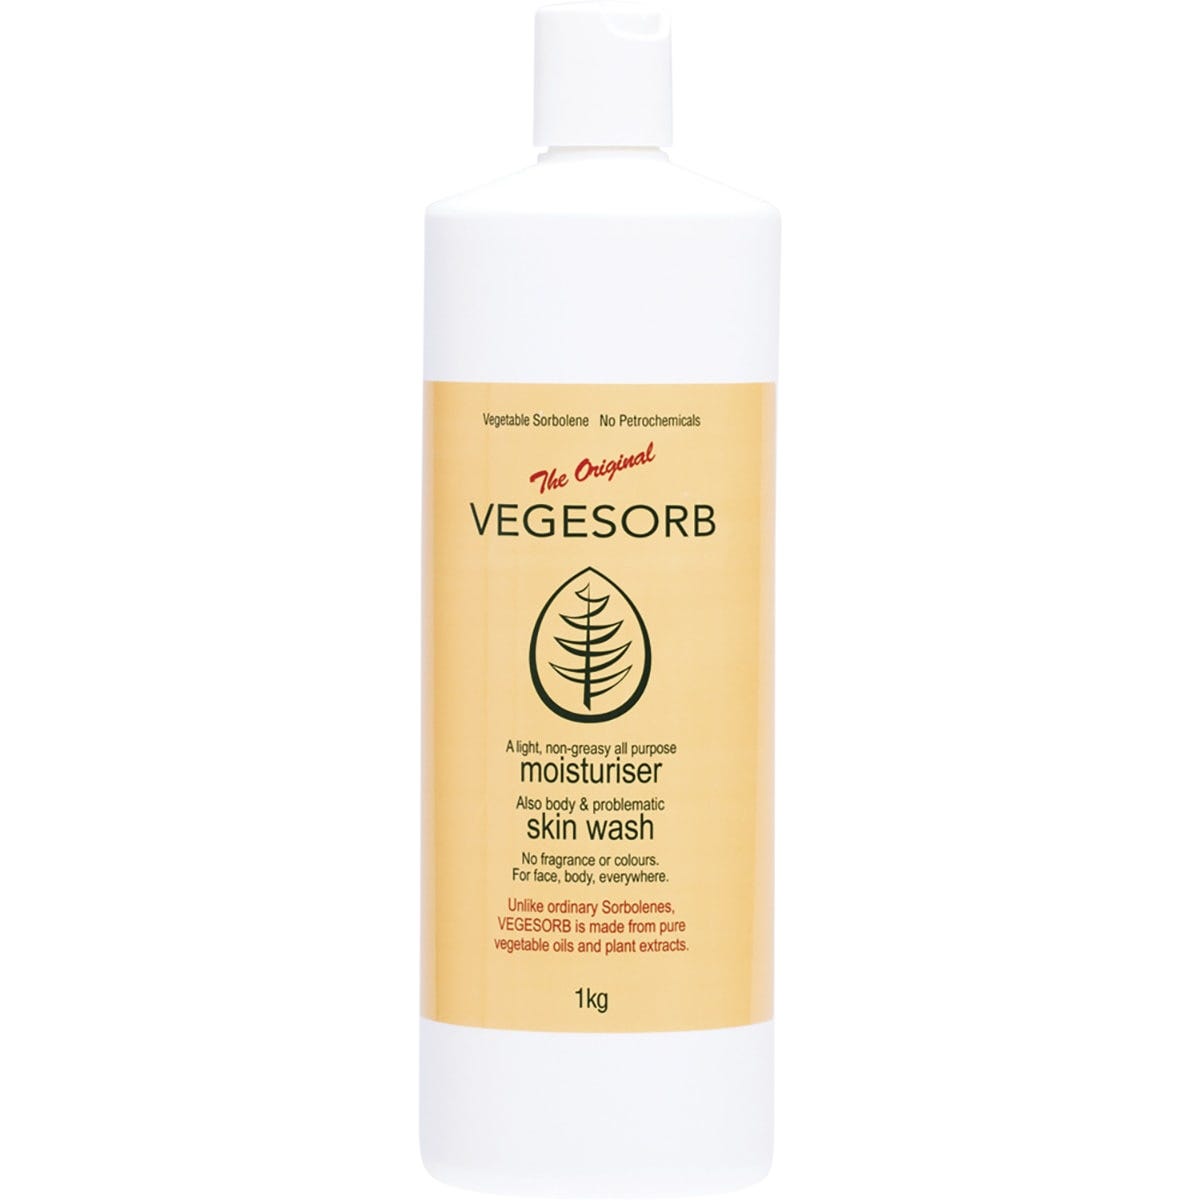 Vegesorb Sorbolene Alternative 1kg - Dr Earth - Skincare, Bath & Body